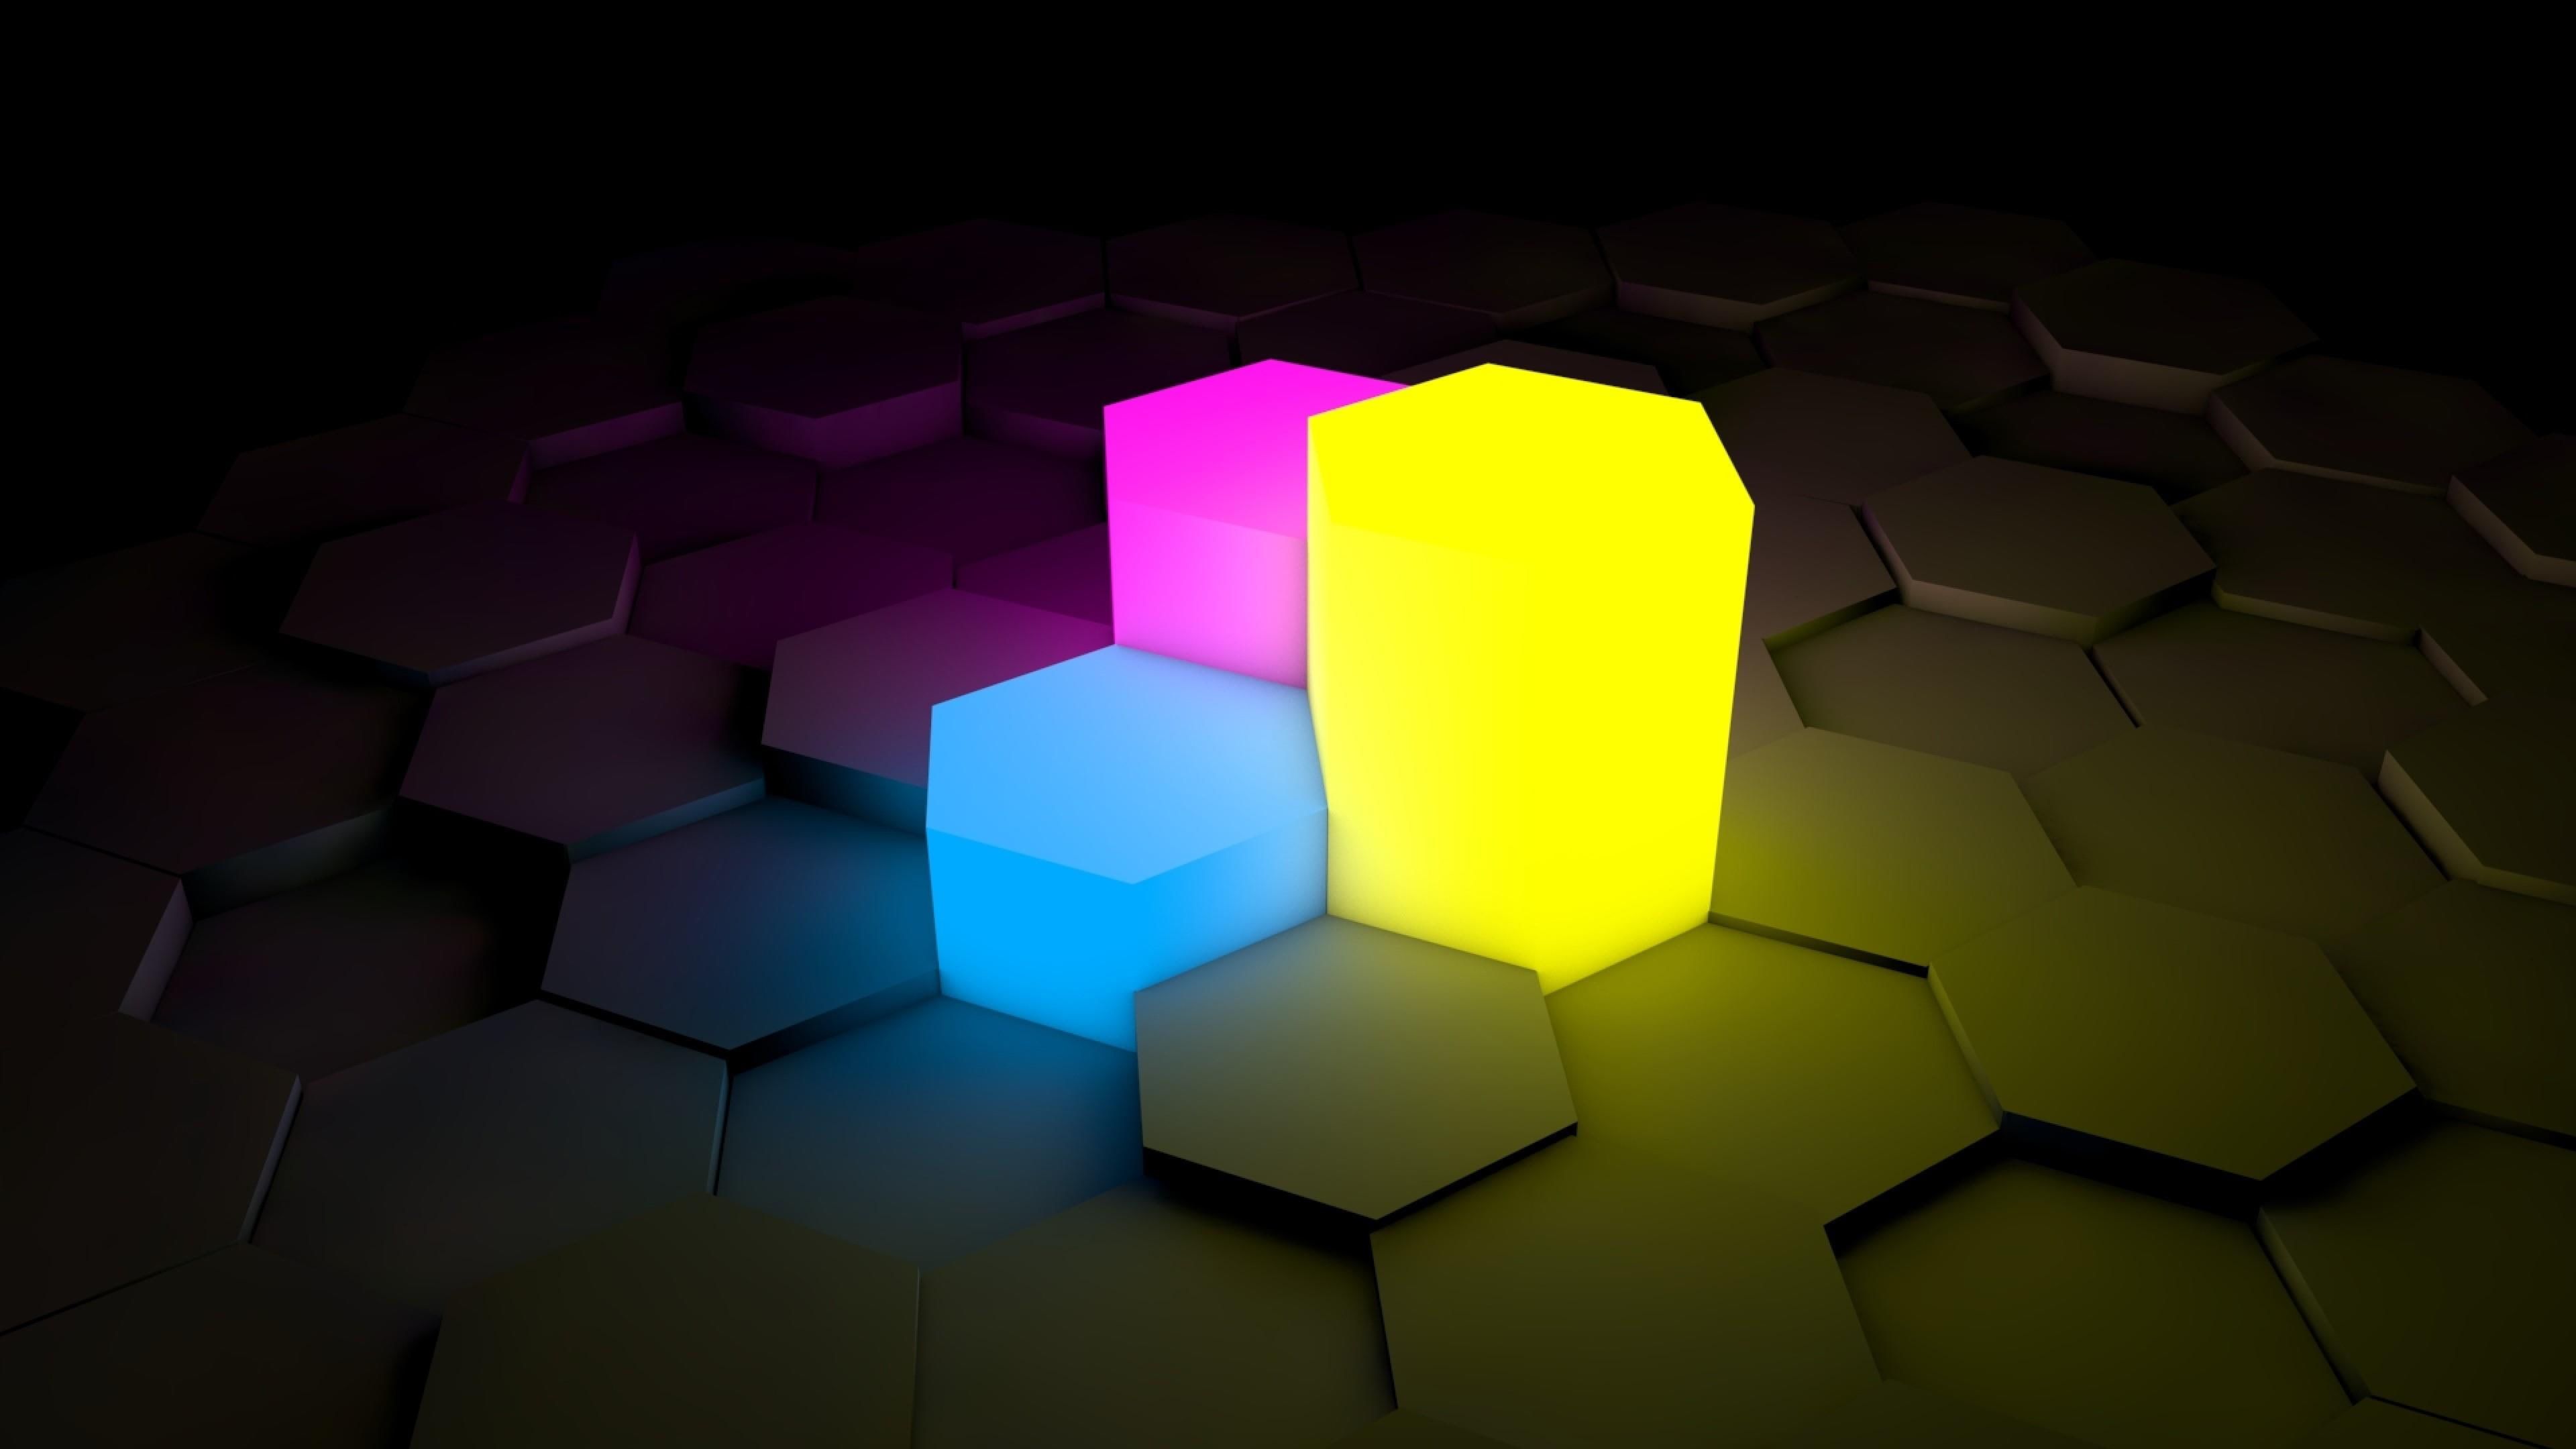 3D #blocks #blue #pink #yellow #dark #abstract #hexagon #shining #shadow #focus #neon K #wallpaper #hdwallpape. Hexagon wallpaper, Neon wallpaper, Wallpaper pc